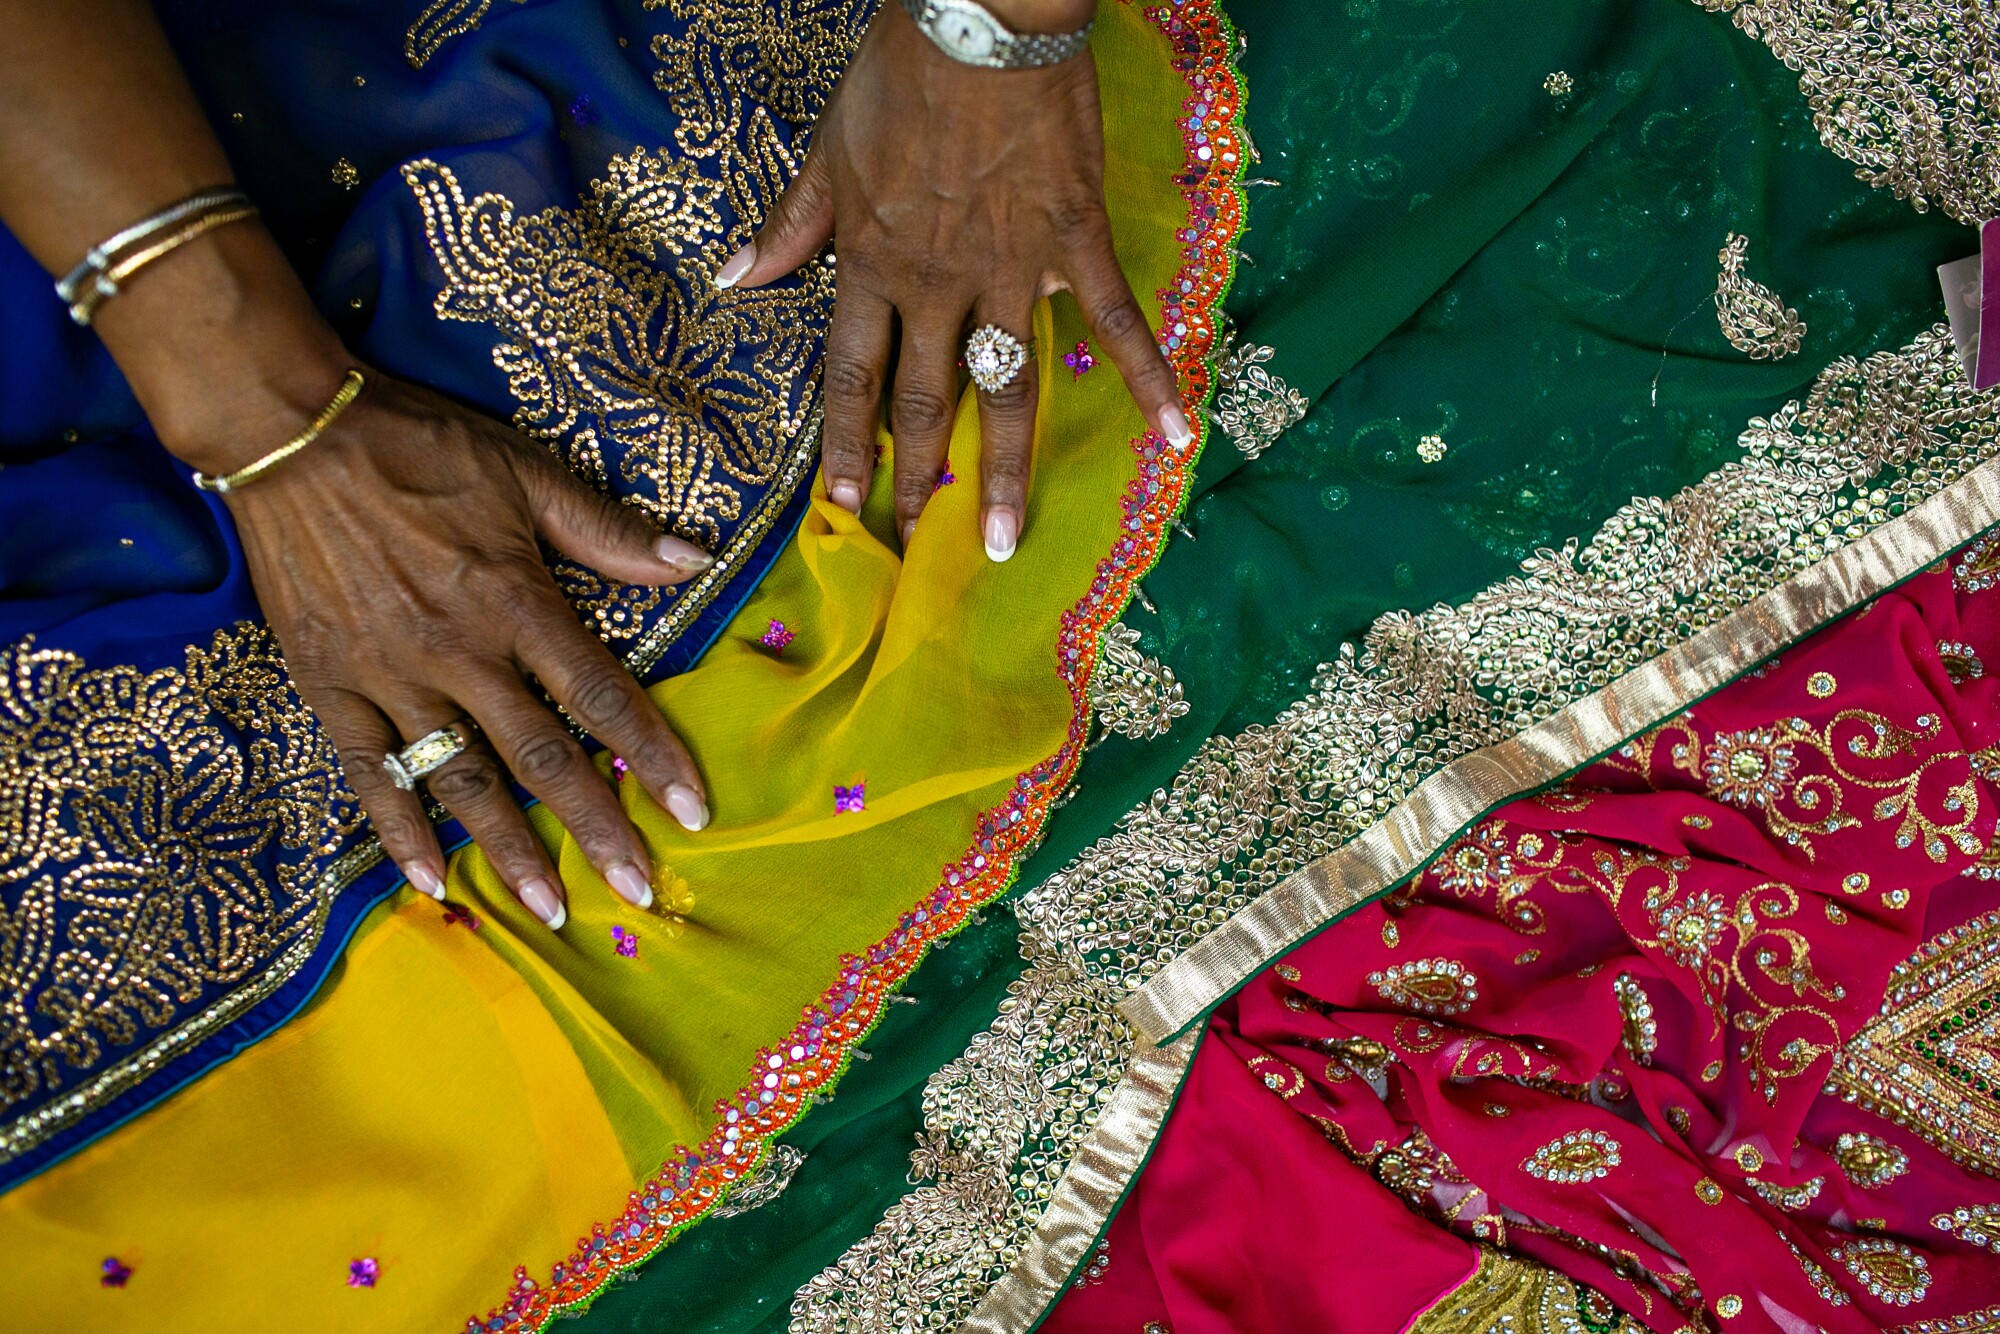 Colorful sari fabrics are shown